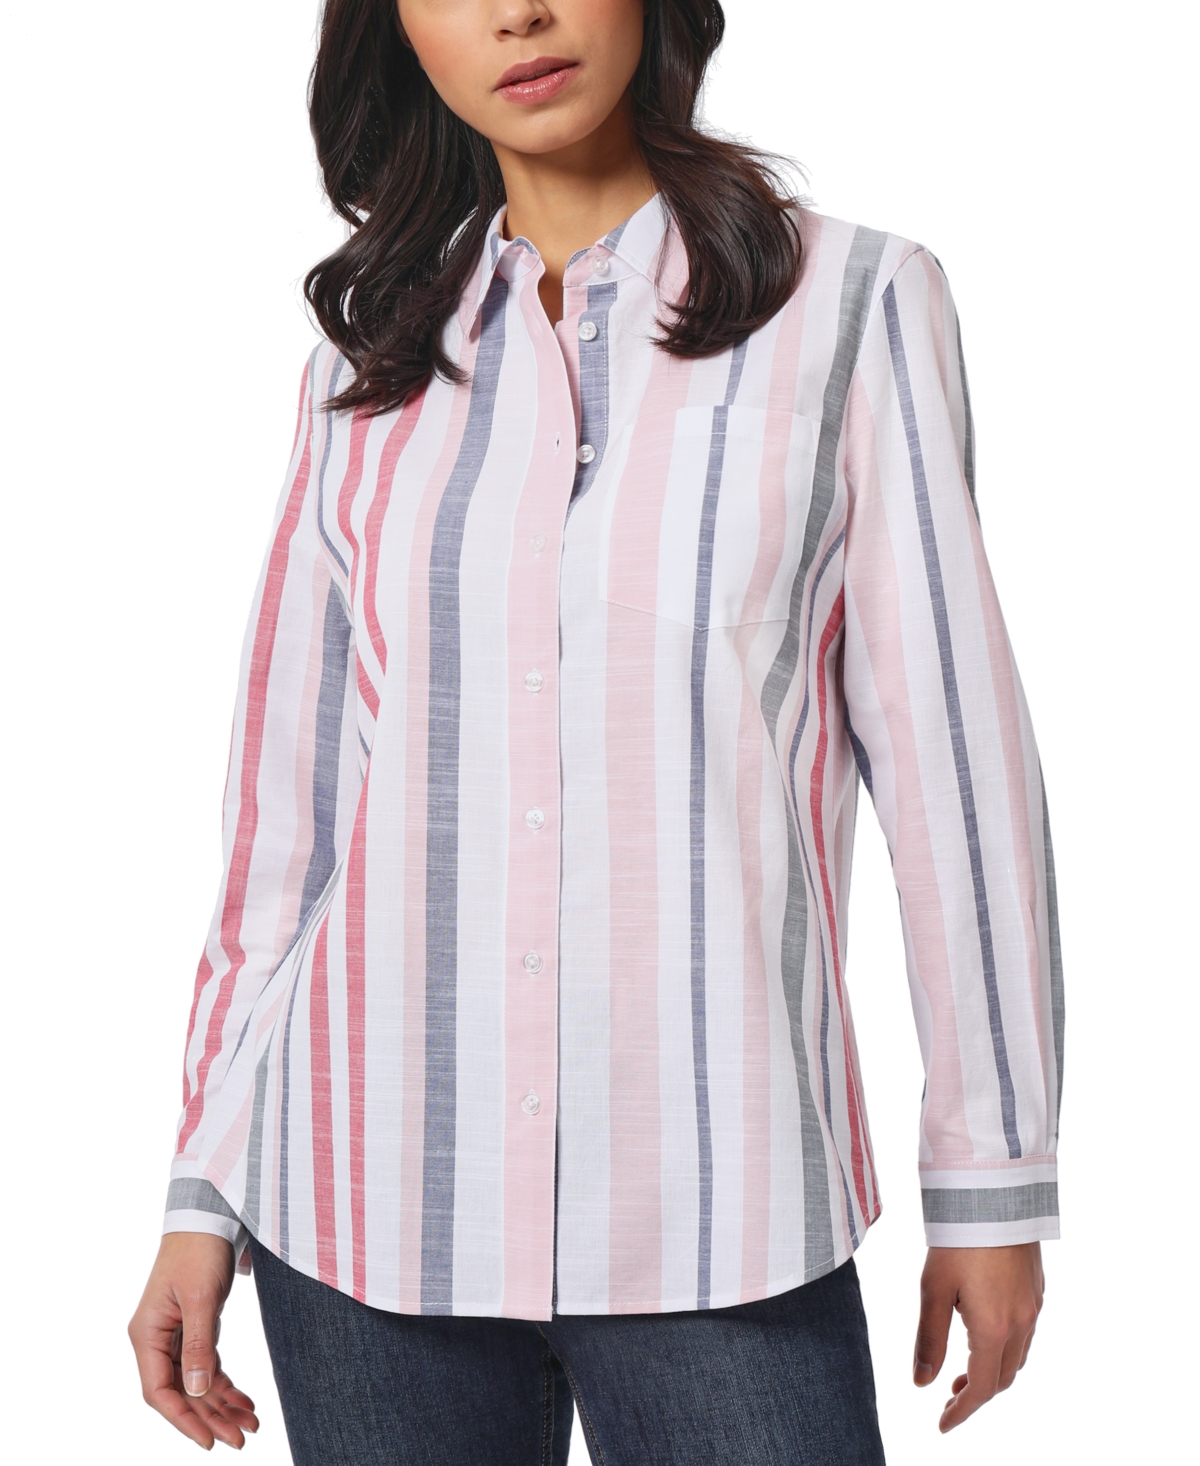 Women's Cotton Striped Shirt - Pacific Navy Multi